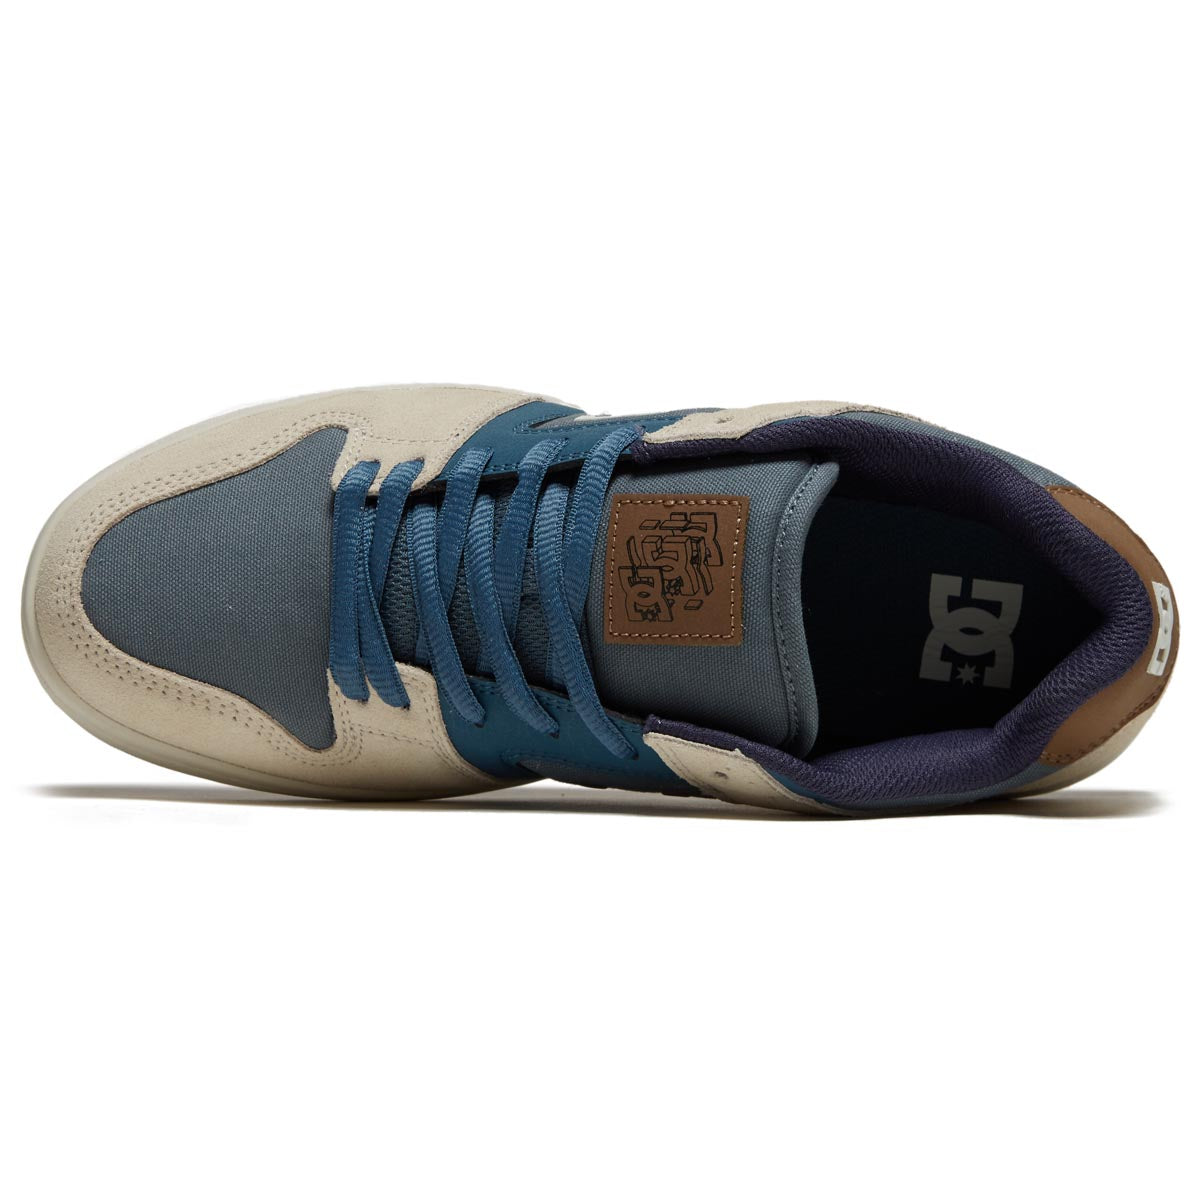 DC Manteca 4 Shoes - Grey/Blue/White image 3